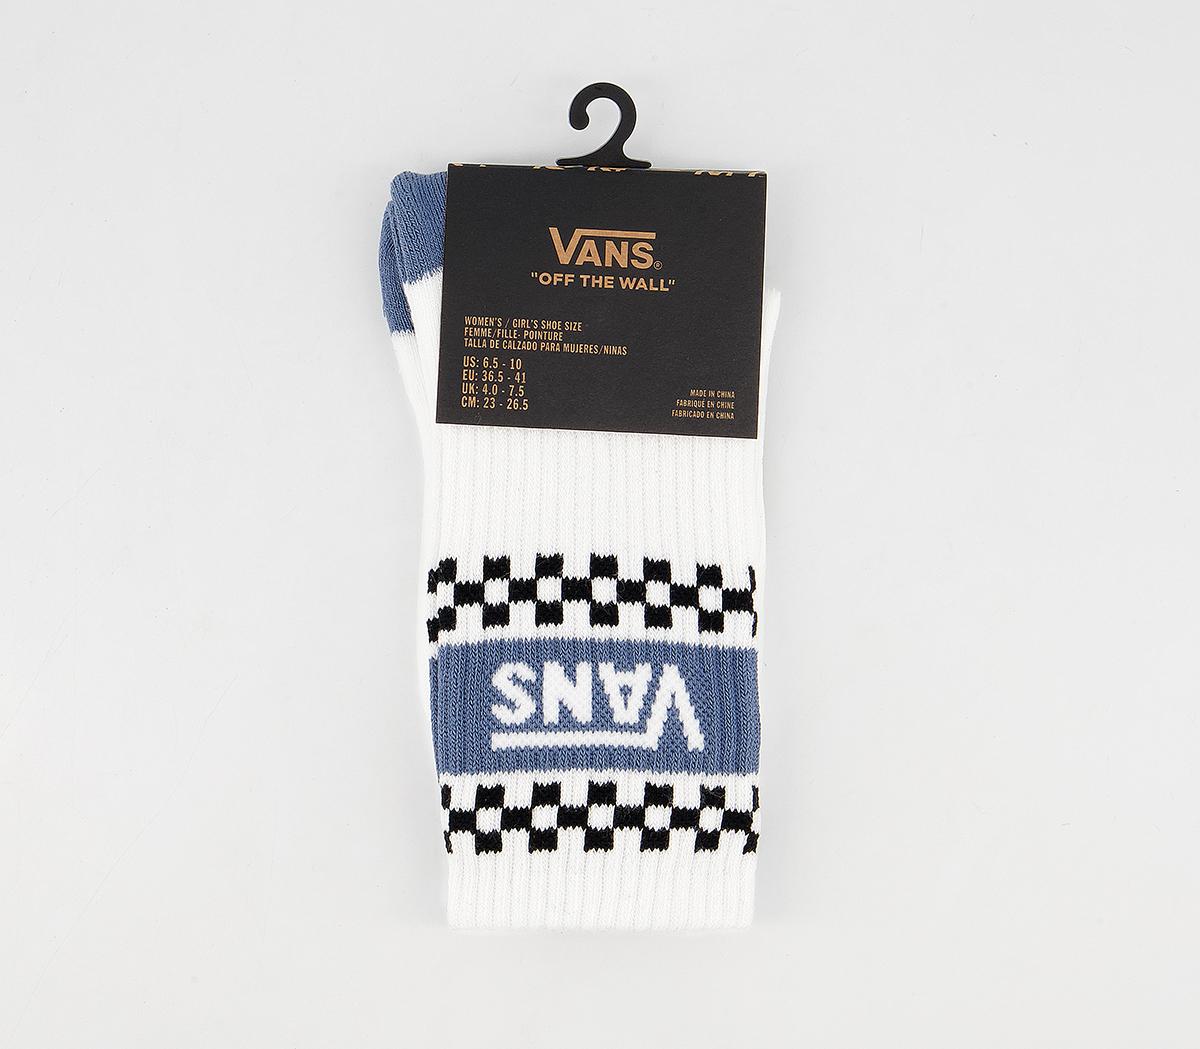 Vans Girl Gang Crew Socks 1 Pack White Cement Blue - Accessories